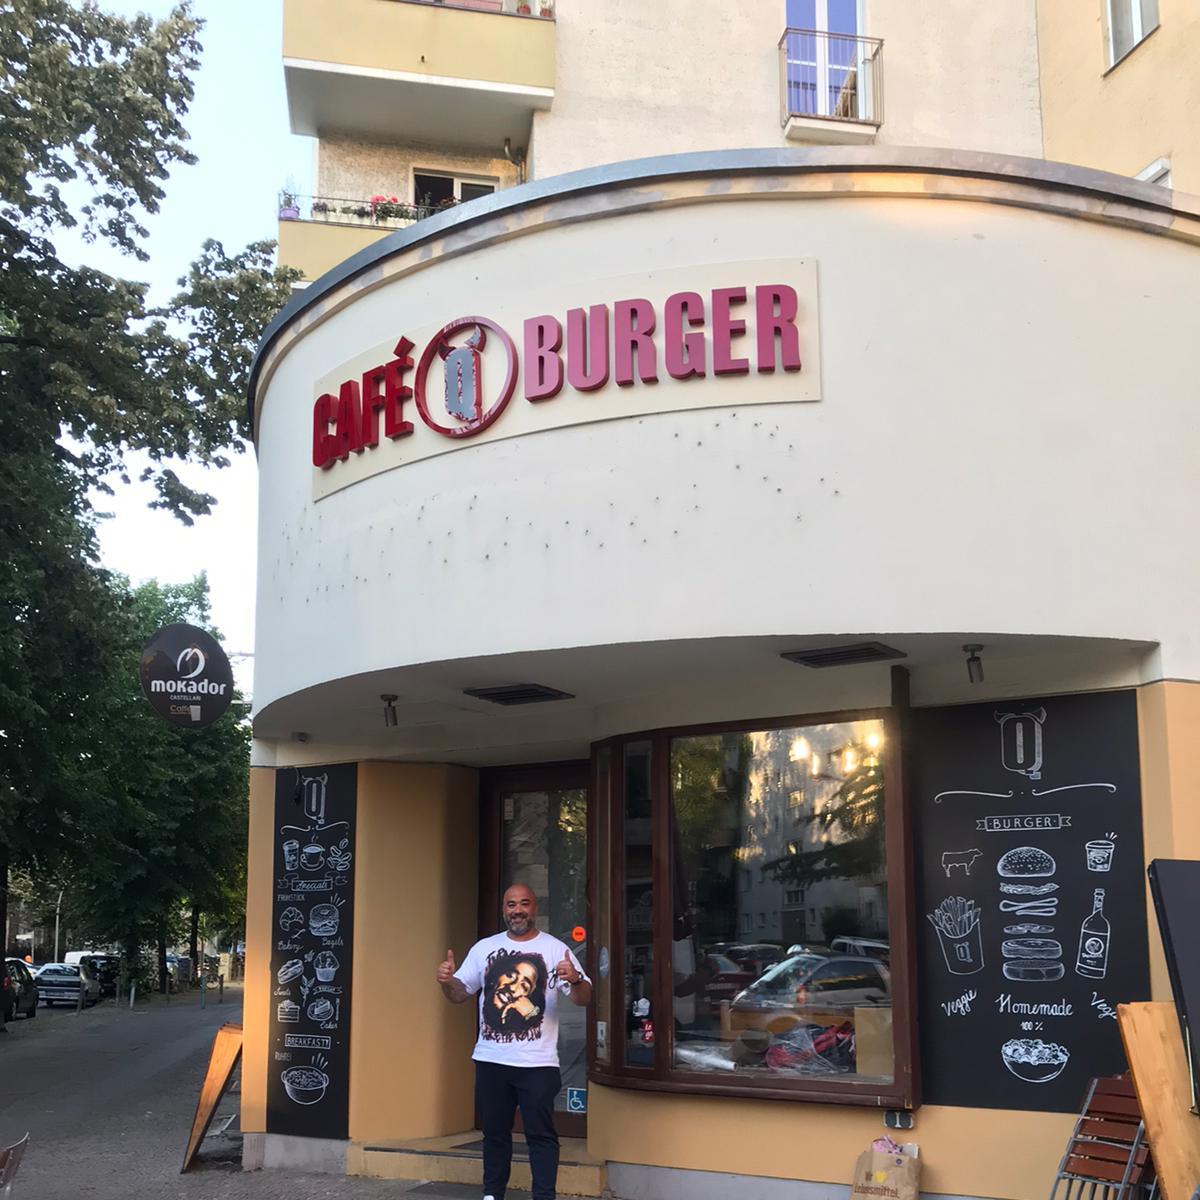 Restaurant "Café Q Burger" in Berlin